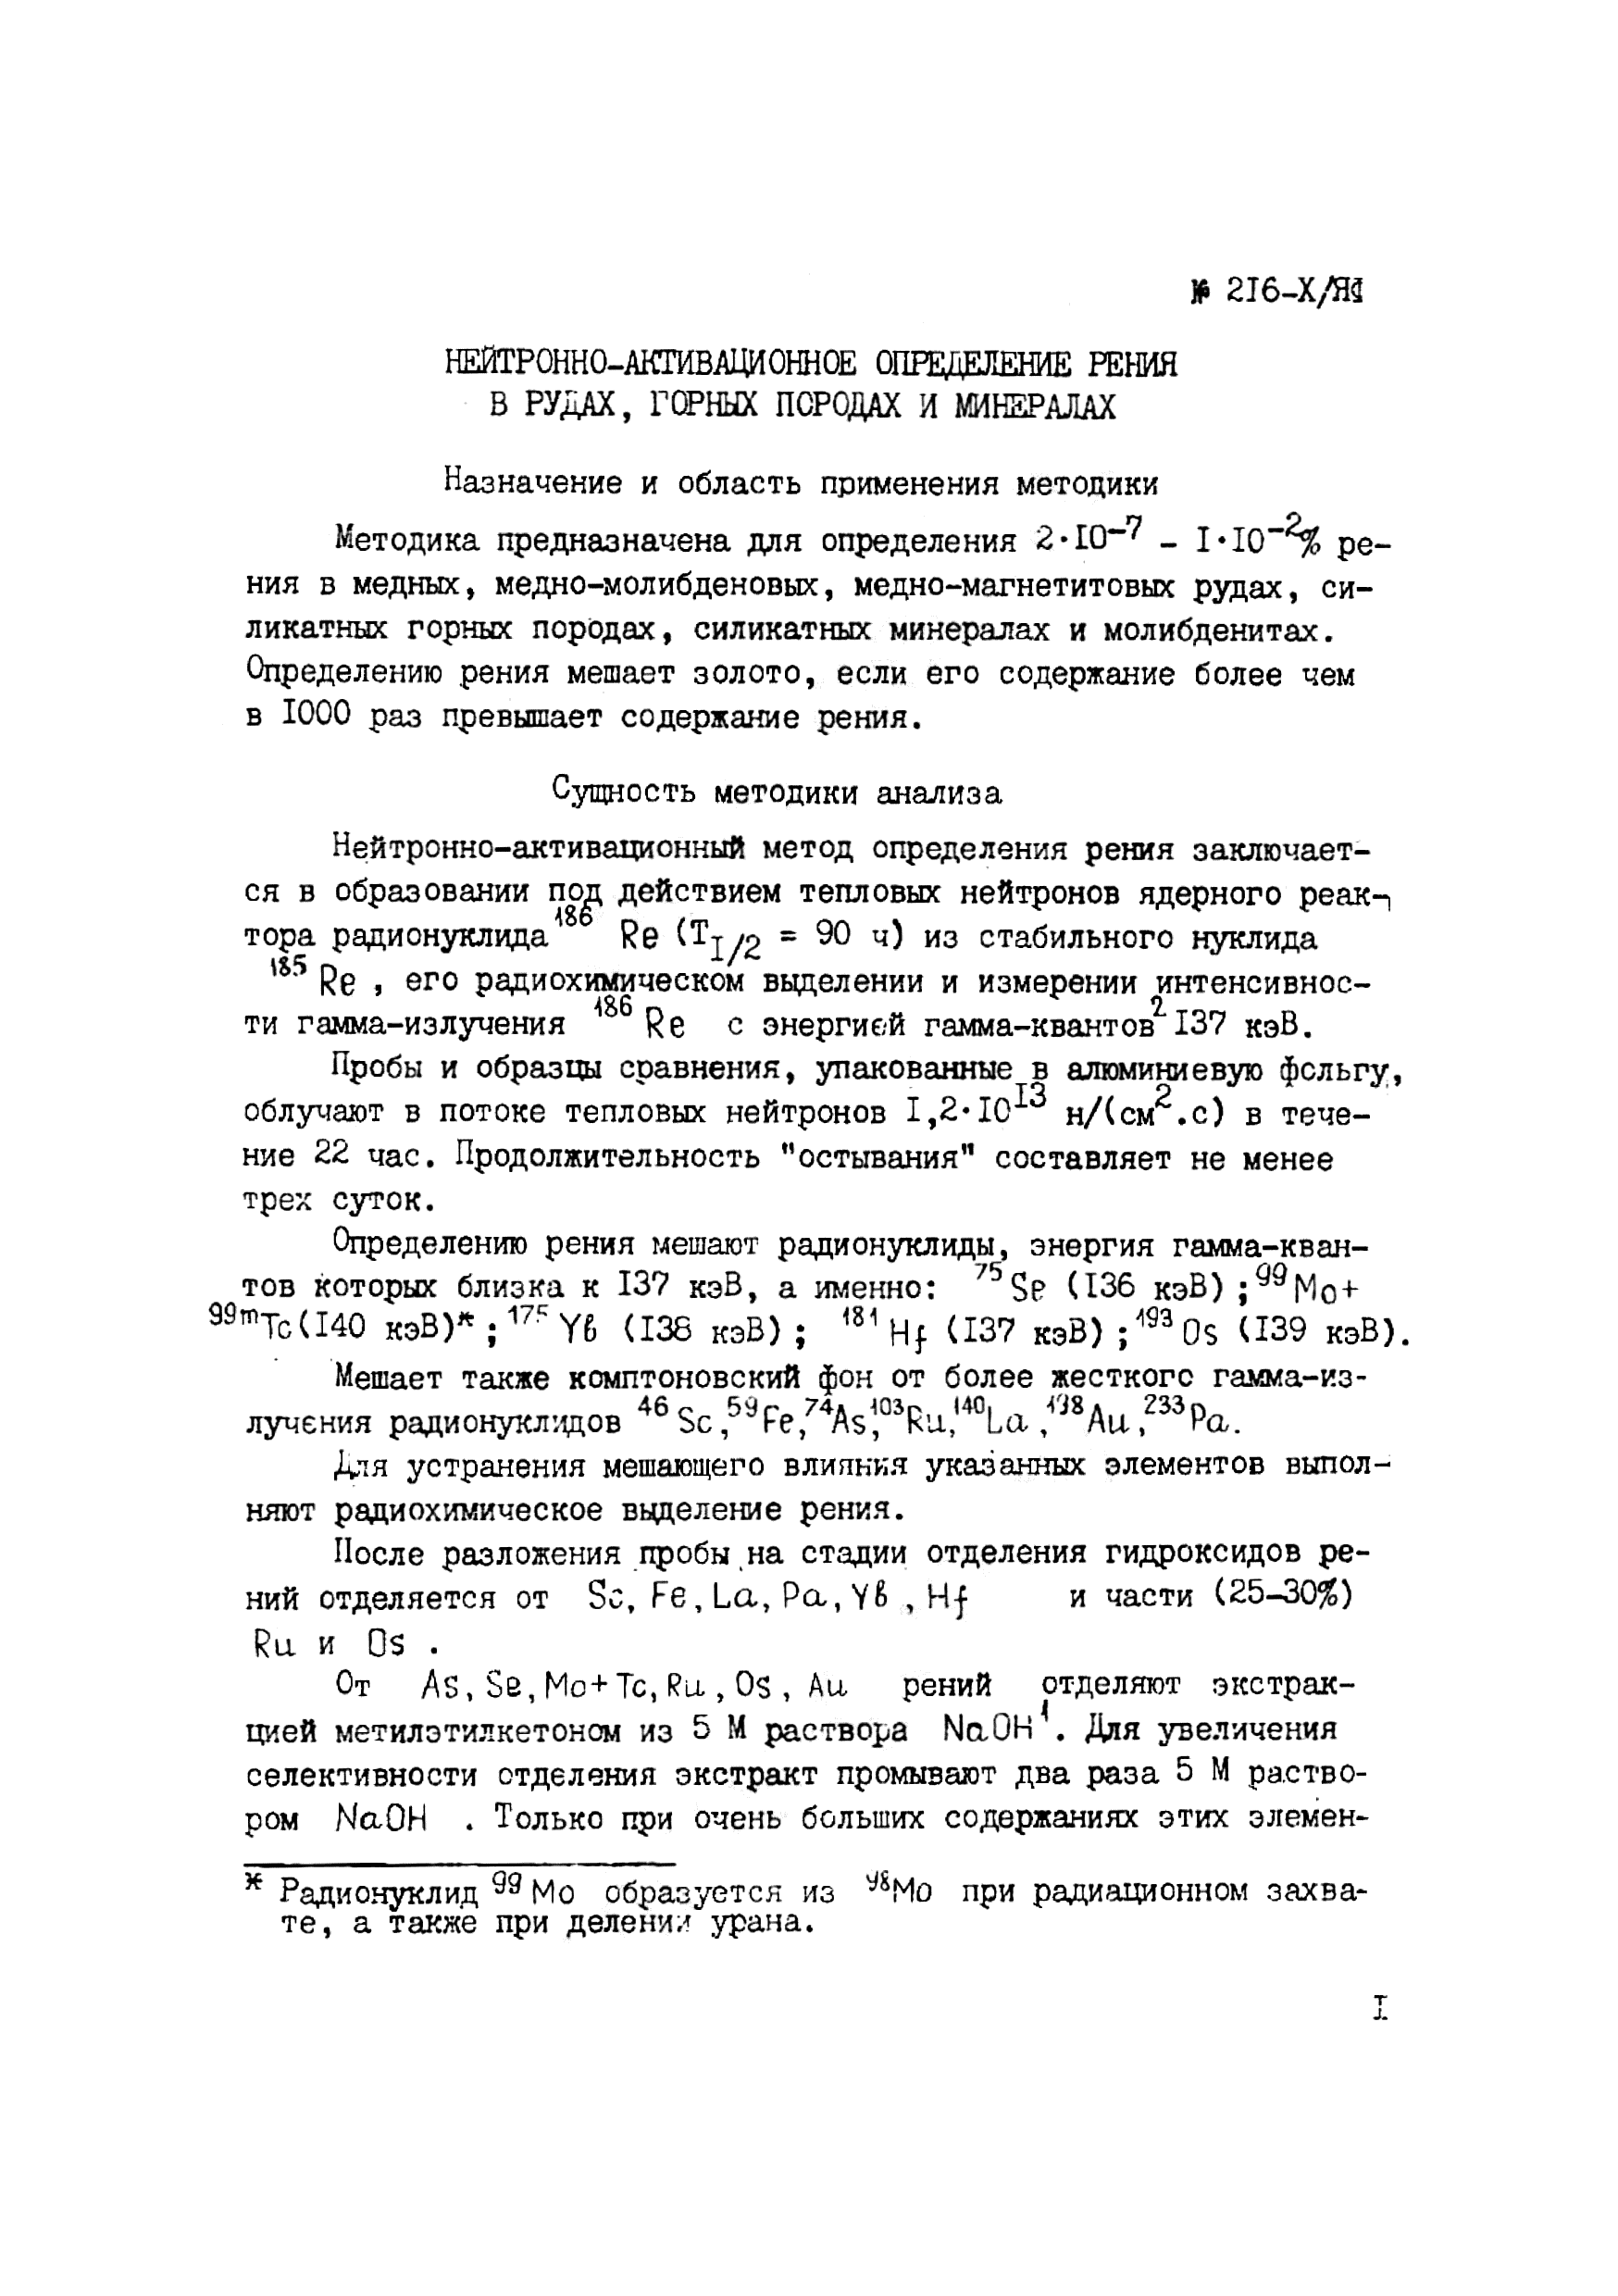 Инструкция НСАМ 216-Х/ЯФ